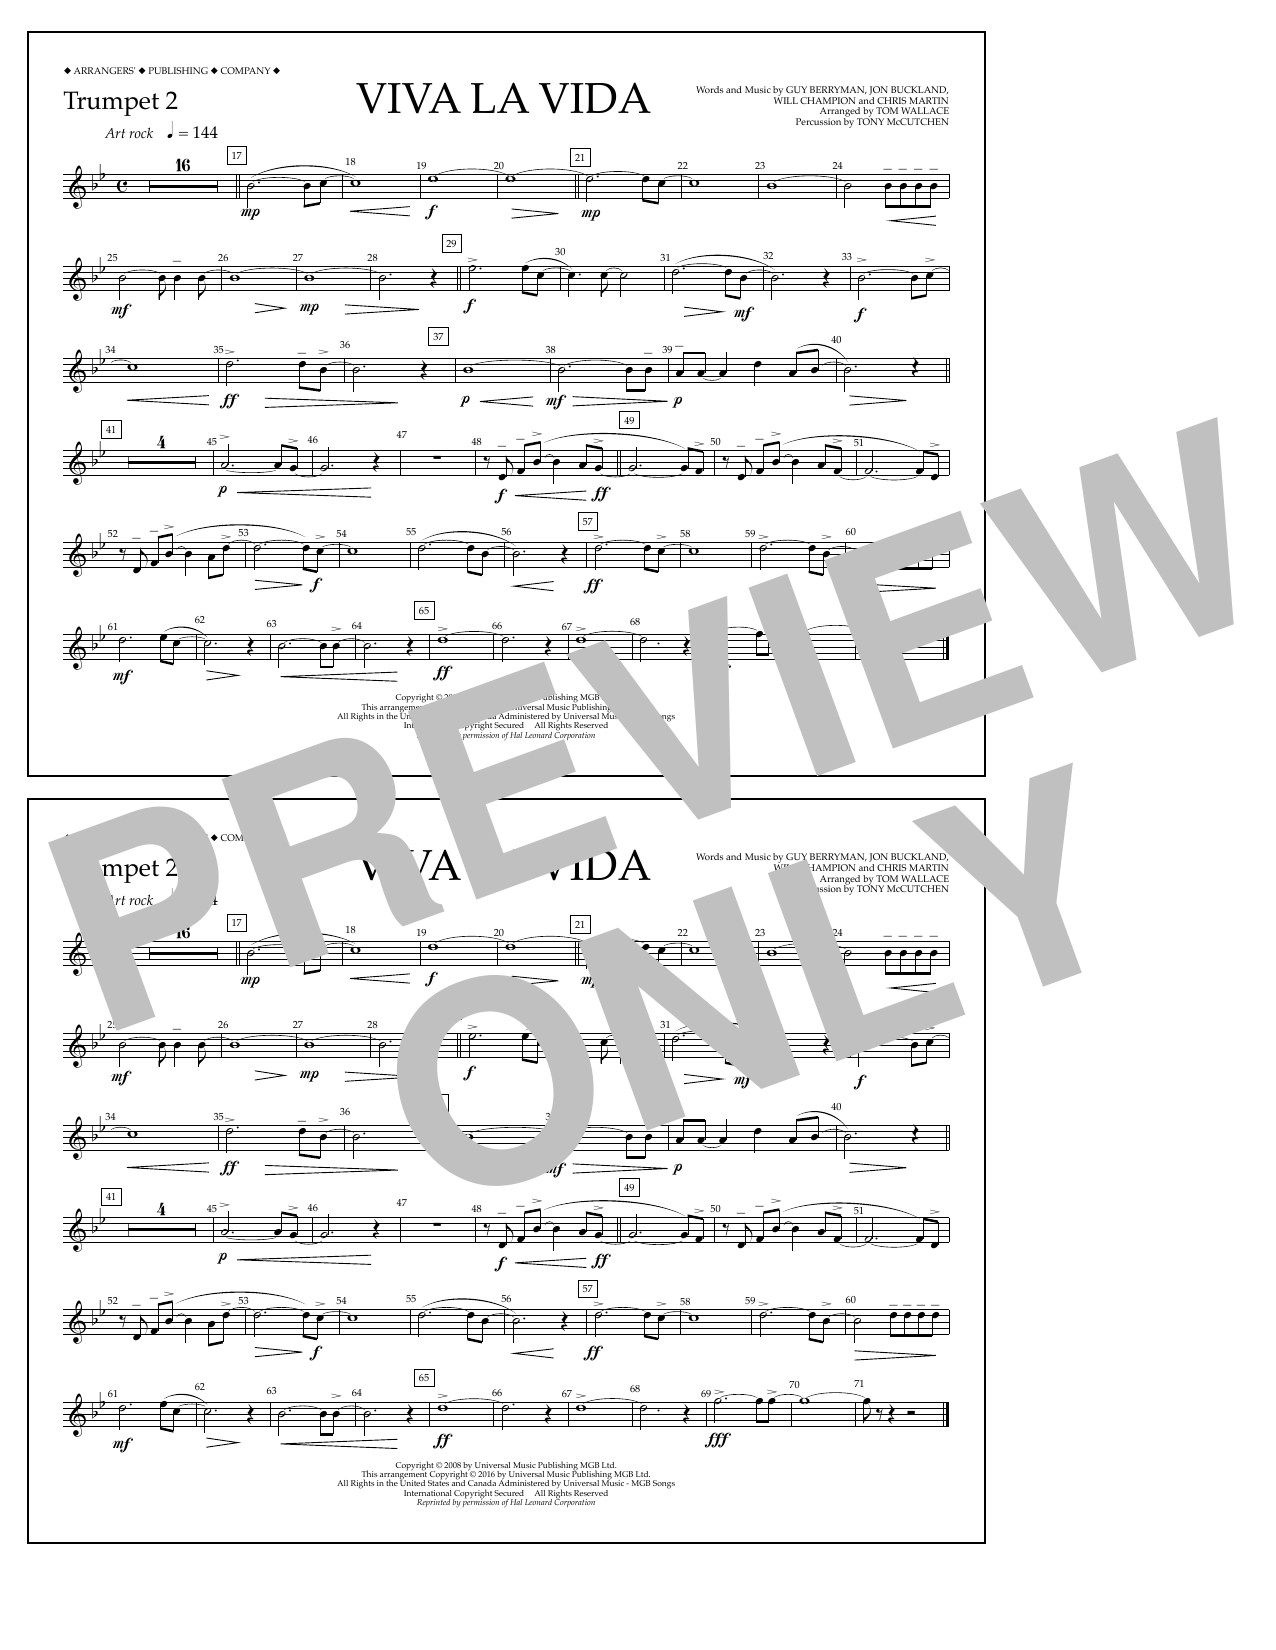 Tom Wallace Viva La Vida - Trumpet 2 Sheet Music Notes & Chords for Marching Band - Download or Print PDF